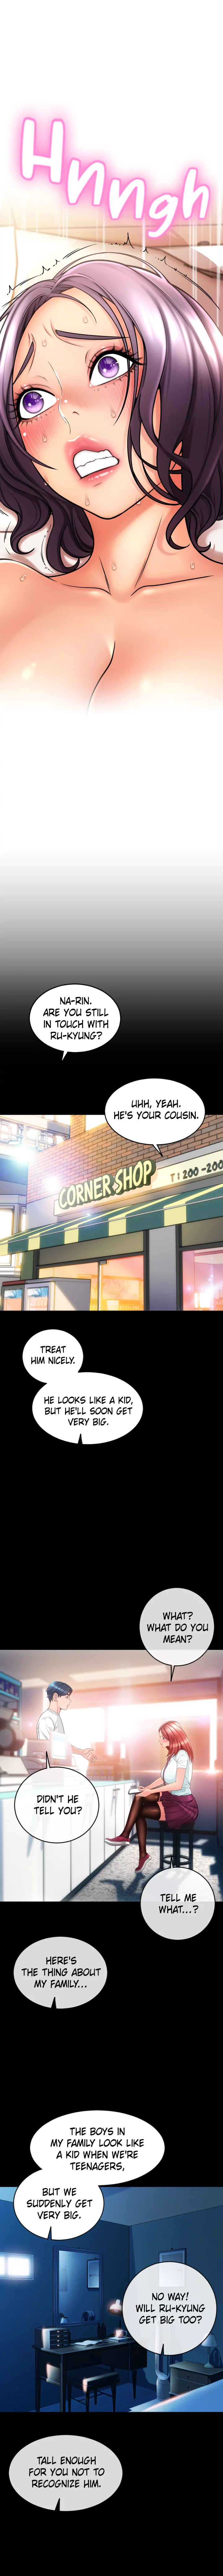 Corner Shop - Chapter 14 Page 6